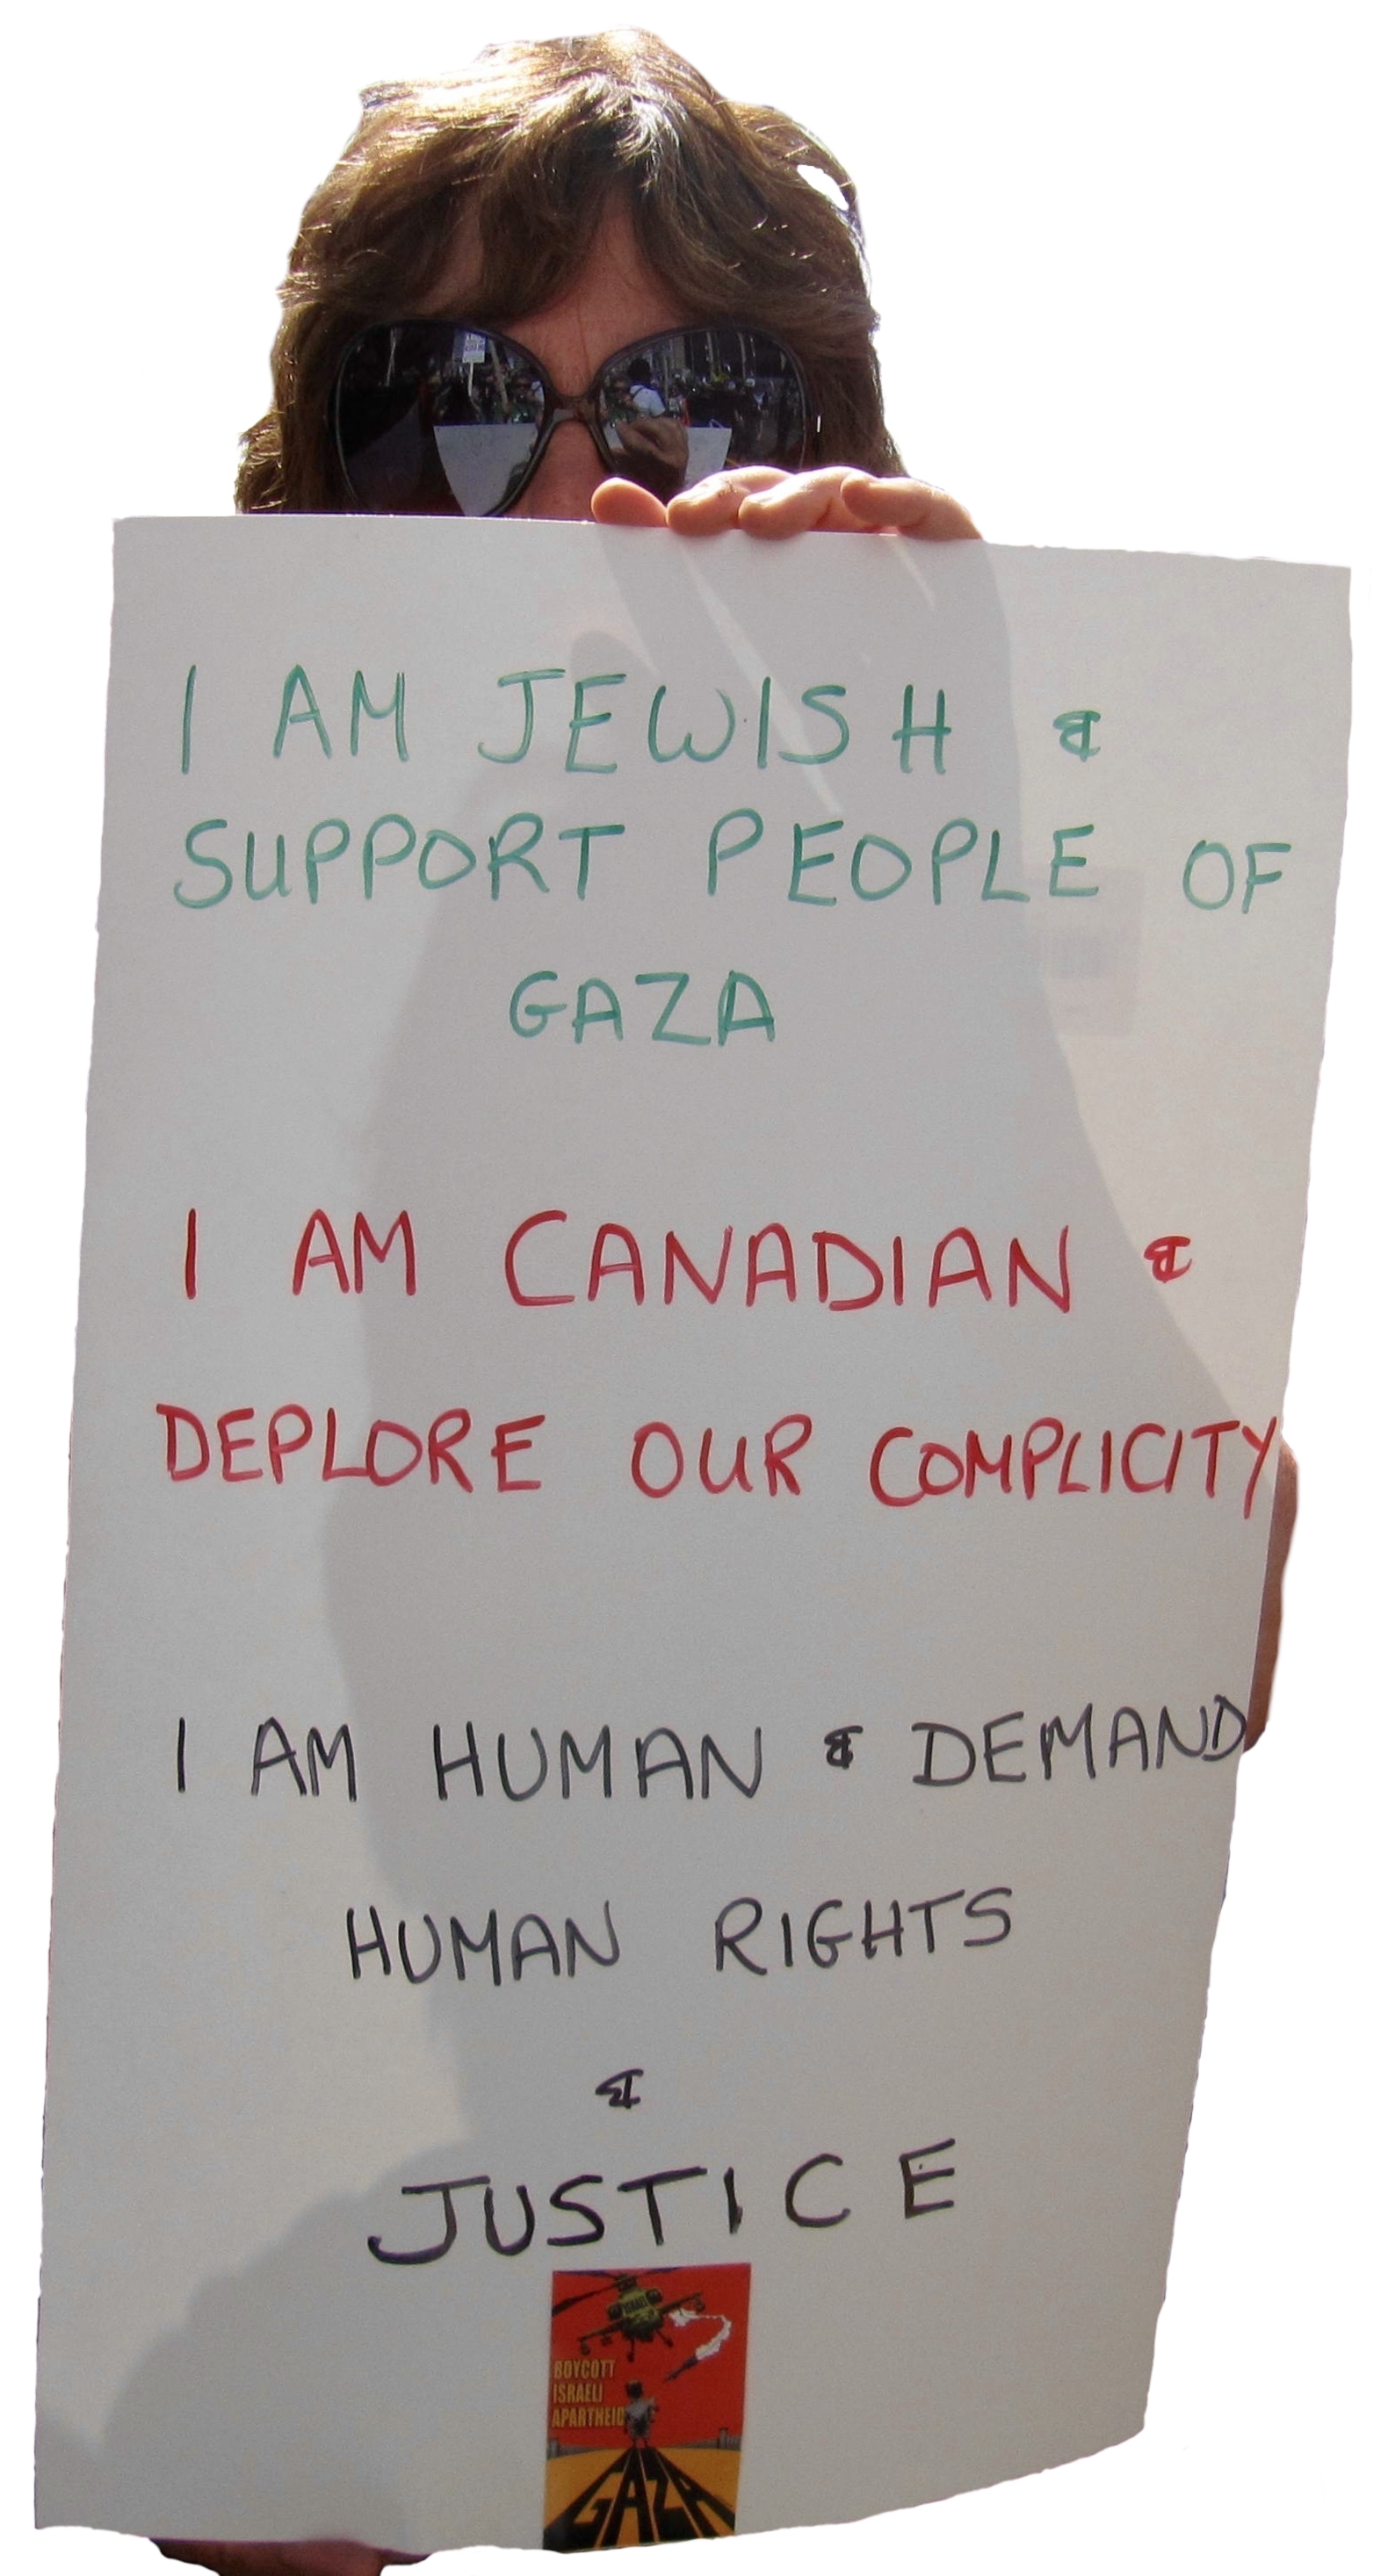 Miriam Garfinkle: I am Jewish and I support people of Gaza